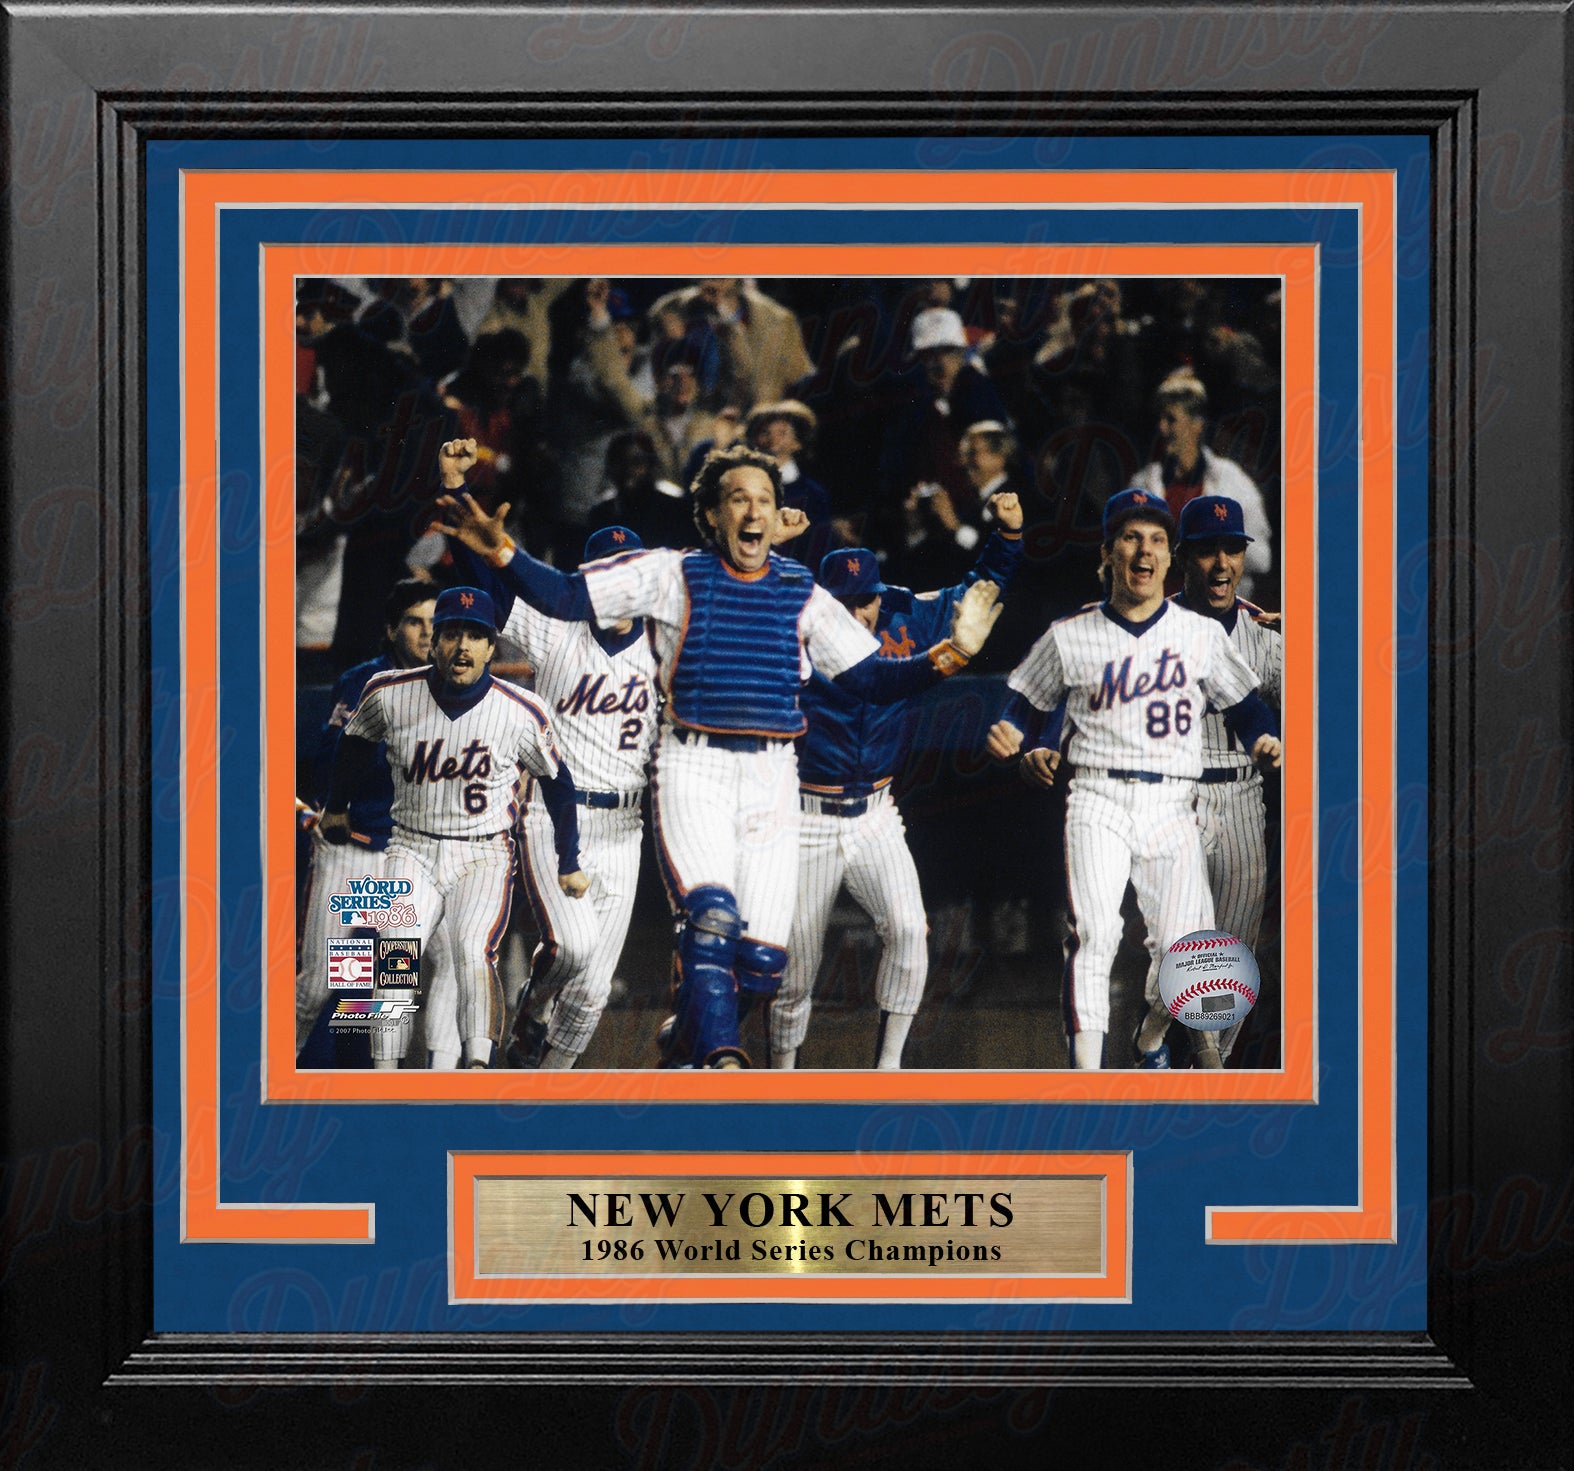 New York Mets 1986 World Series Champions 8 x 10 Framed Baseball Photo -  Dynasty Sports & Framing